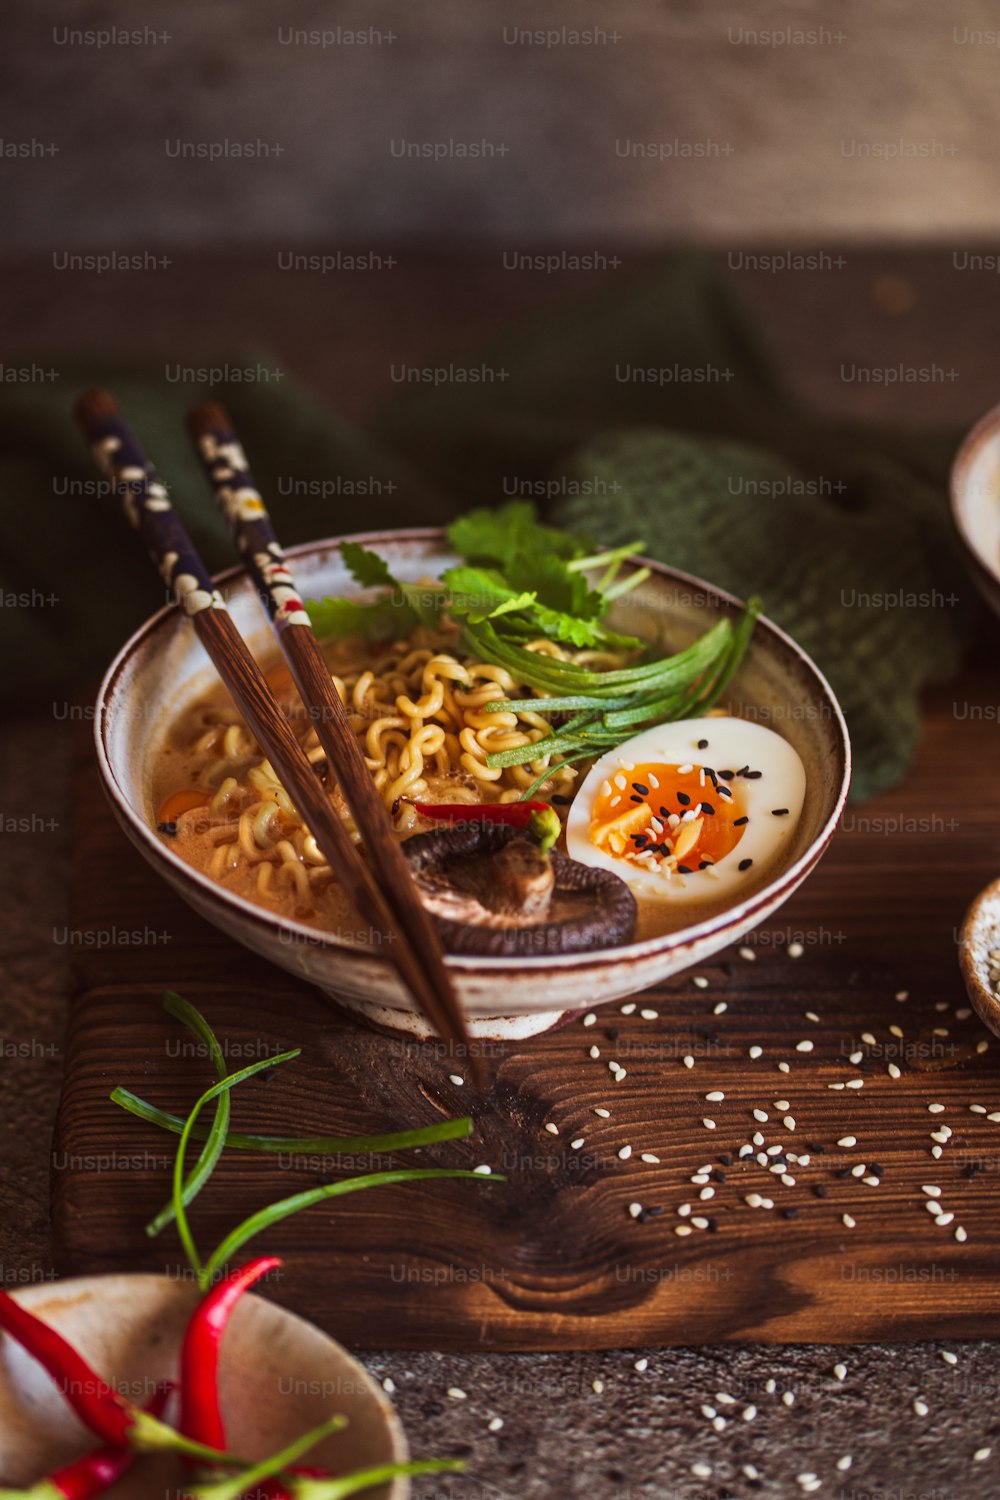 a bowl of ramen with chopsticks on a wooden board